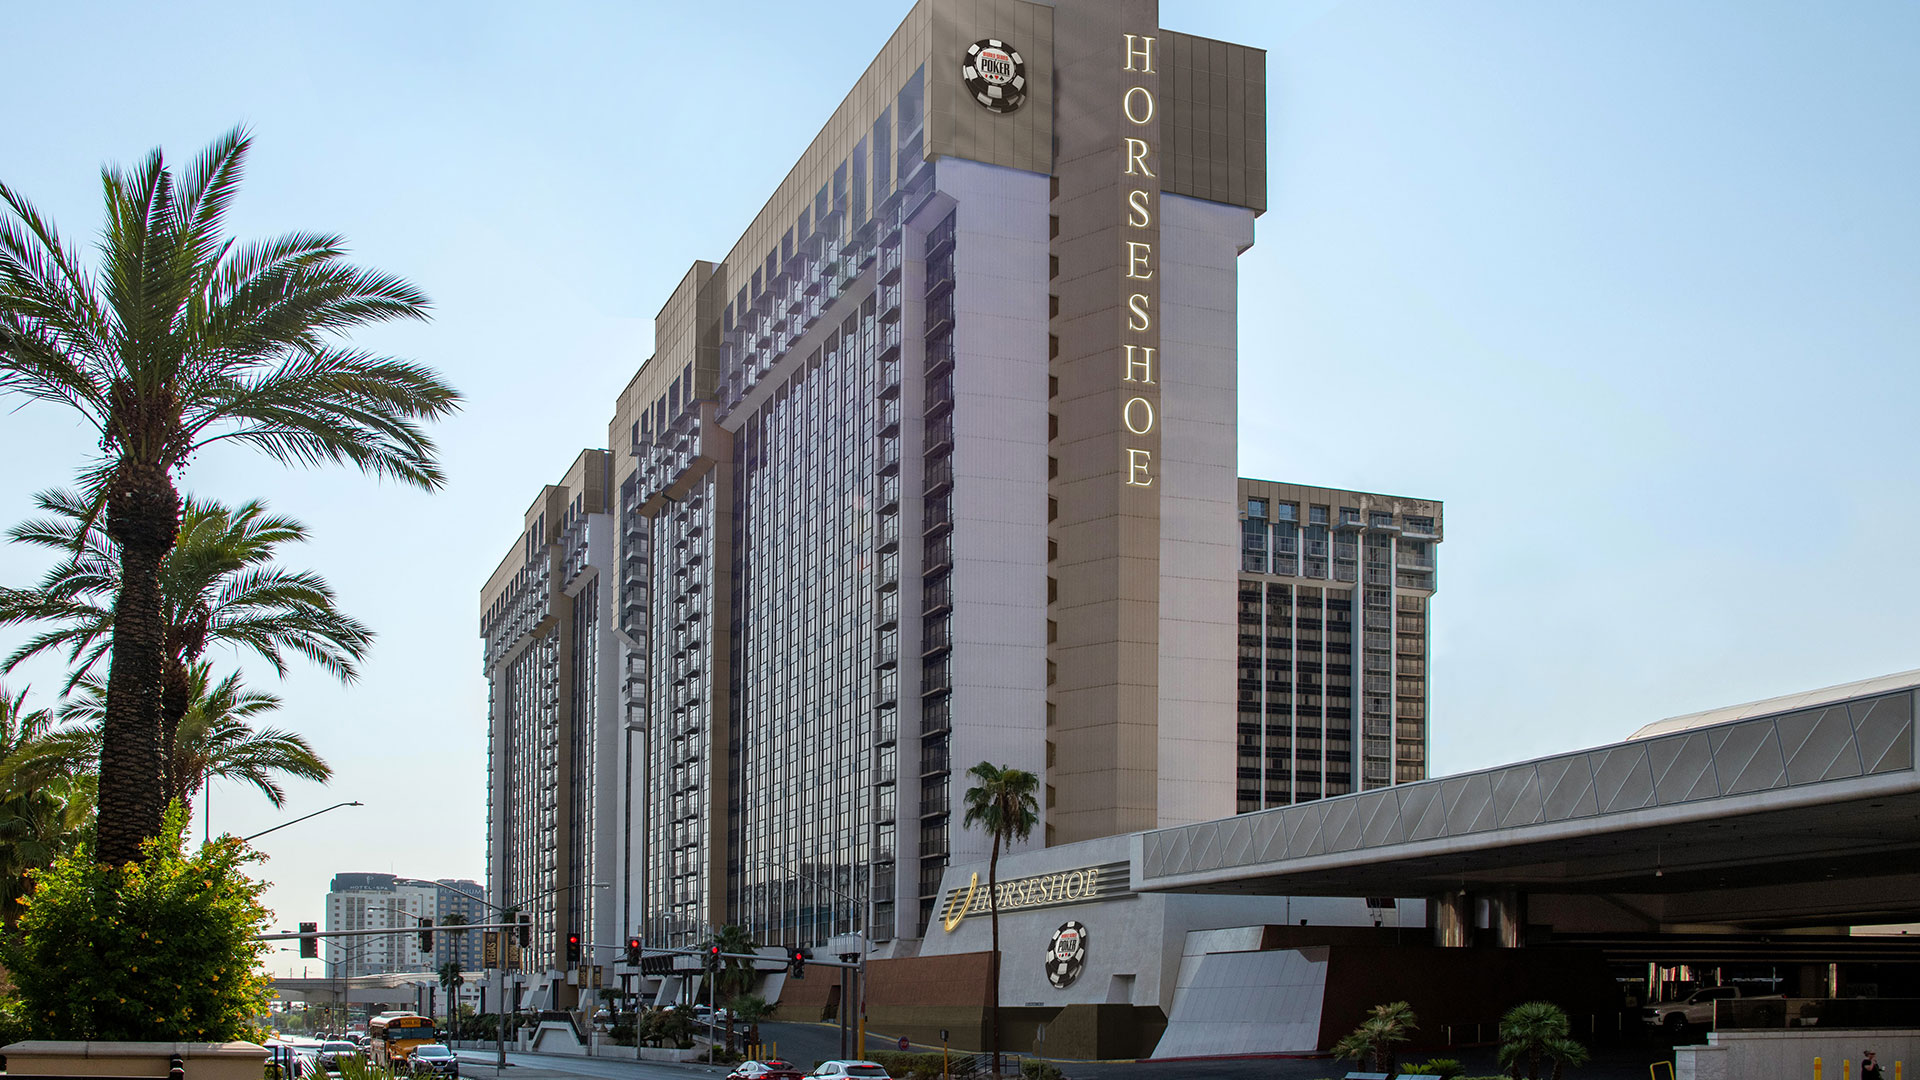 Horseshoe Las Vegas “Formerly Bally's”, Las Vegas (NV)